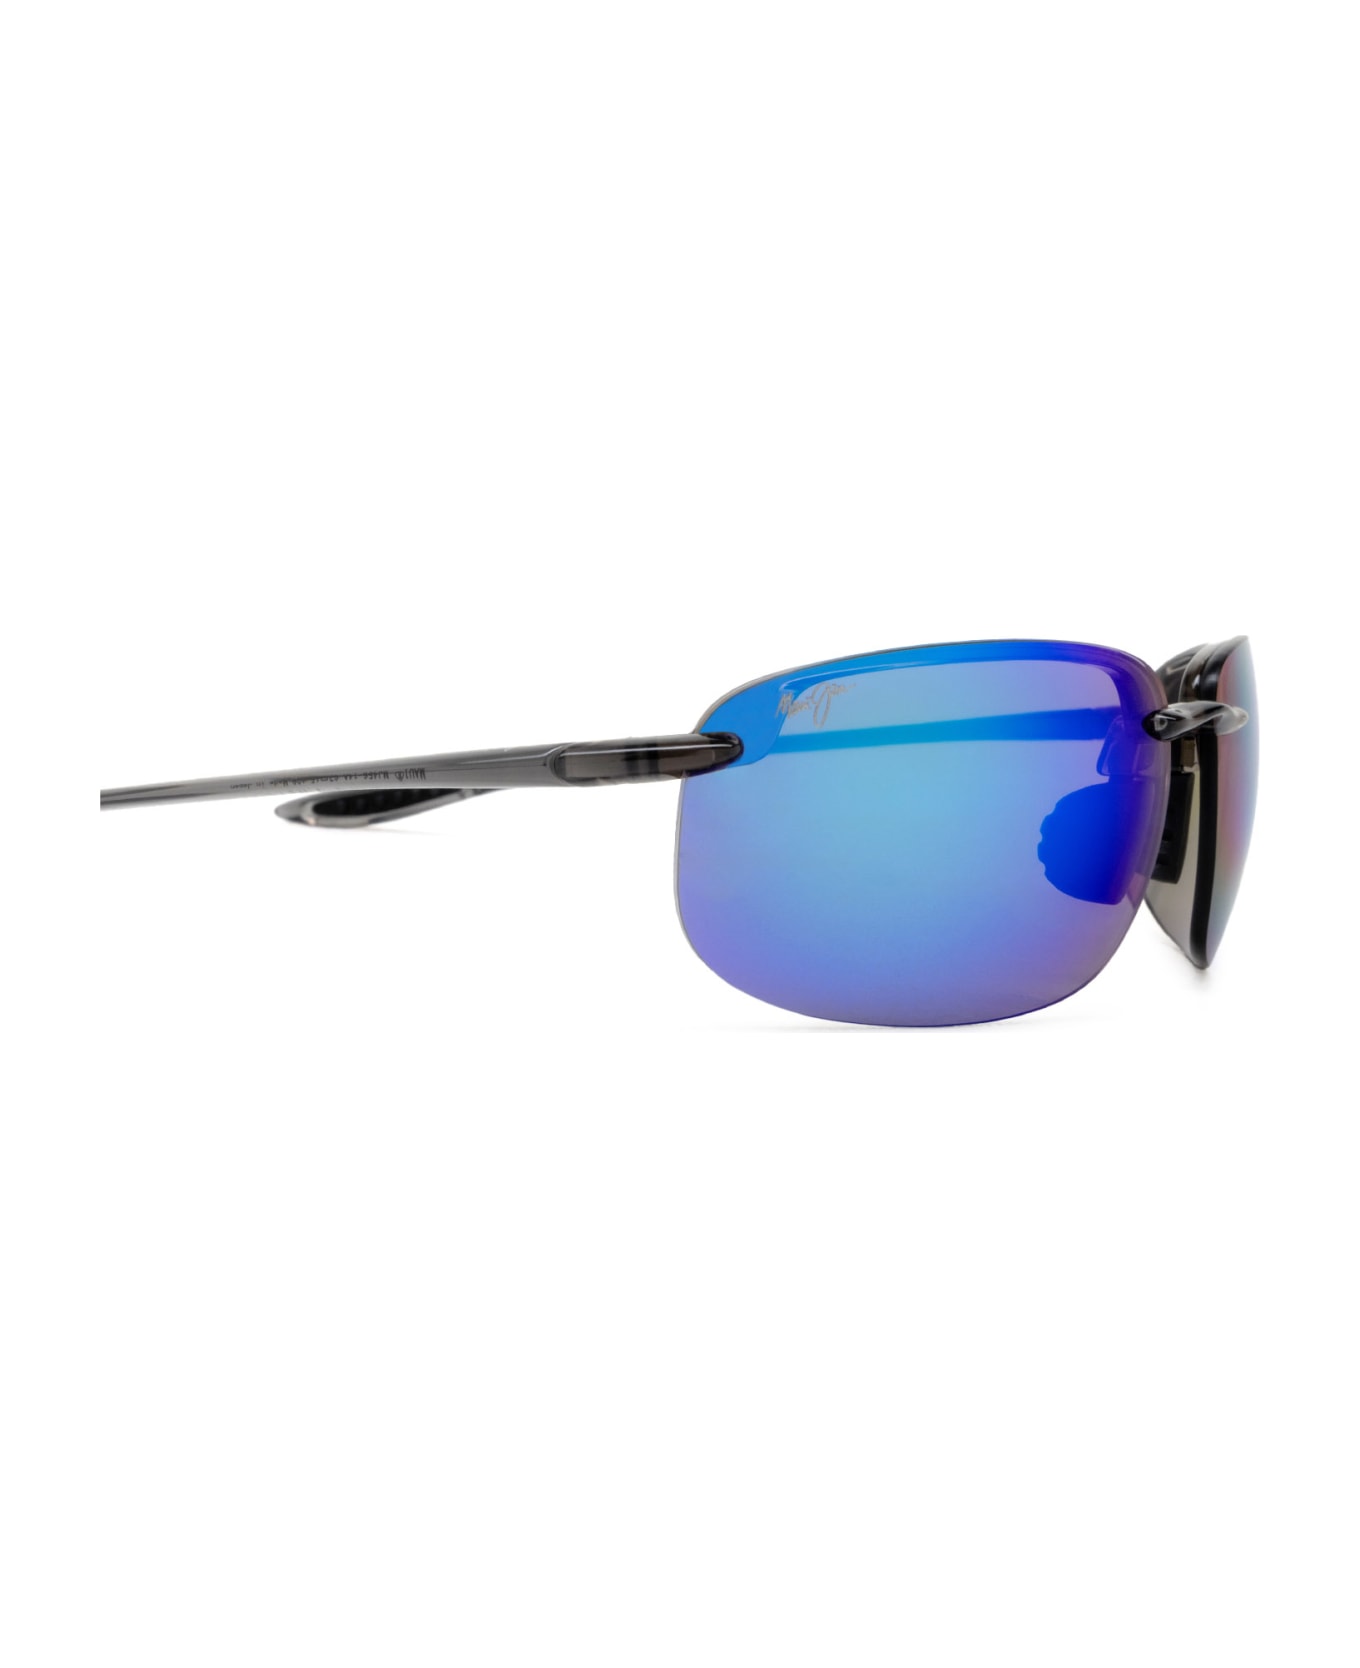 Maui Jim Mj456 Translucent Grey Sunglasses - Translucent Grey サングラス